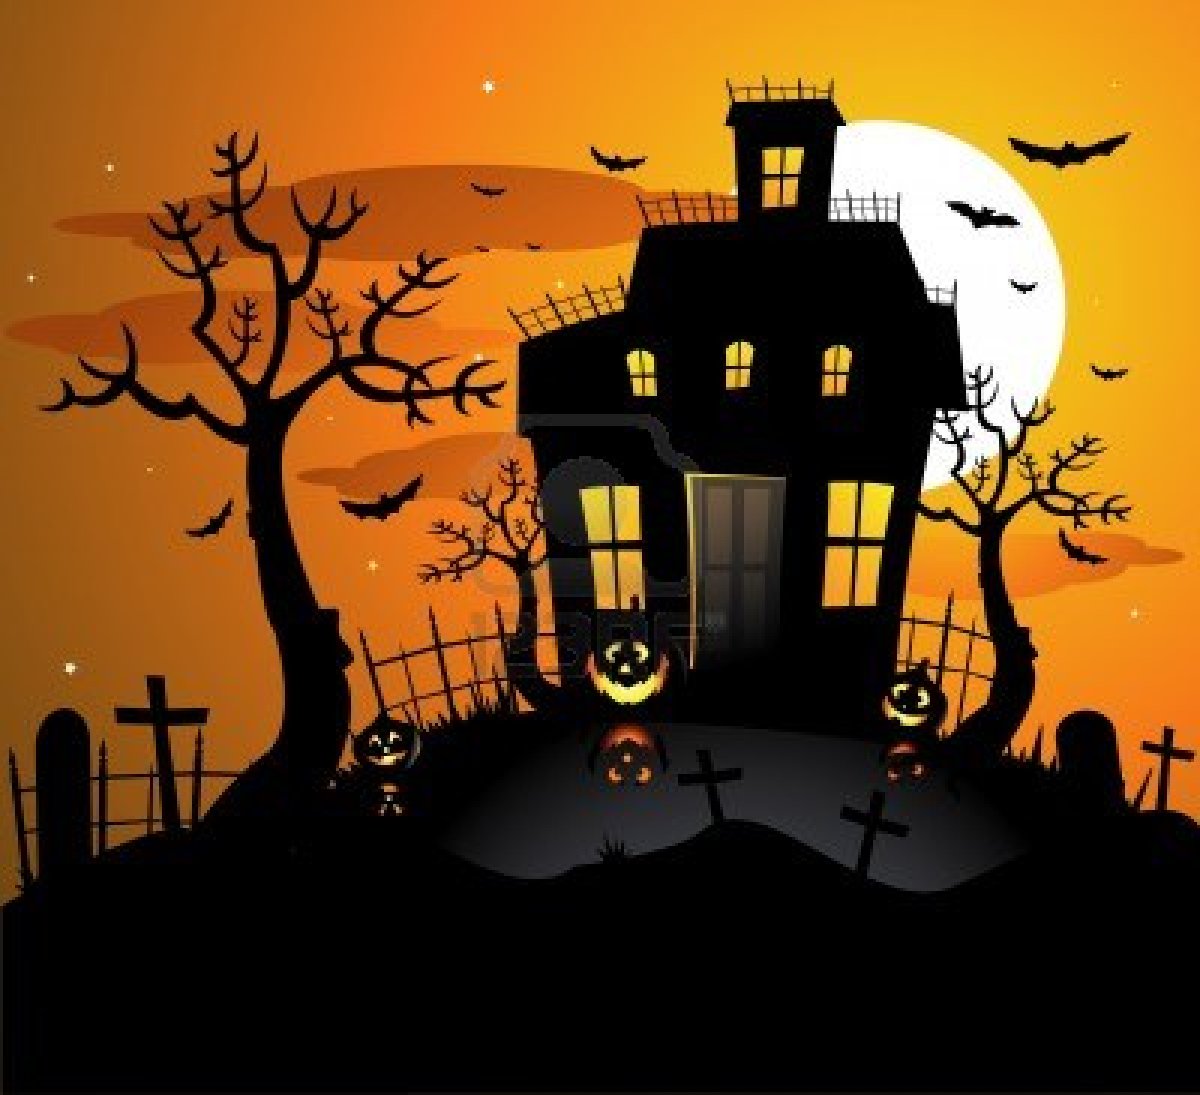 http://us.123rf.com/400wm/400/400/hugolacasse/hugolacasse1101/hugolacasse110100186/8667353-halloween-haunted-house-background.jpg